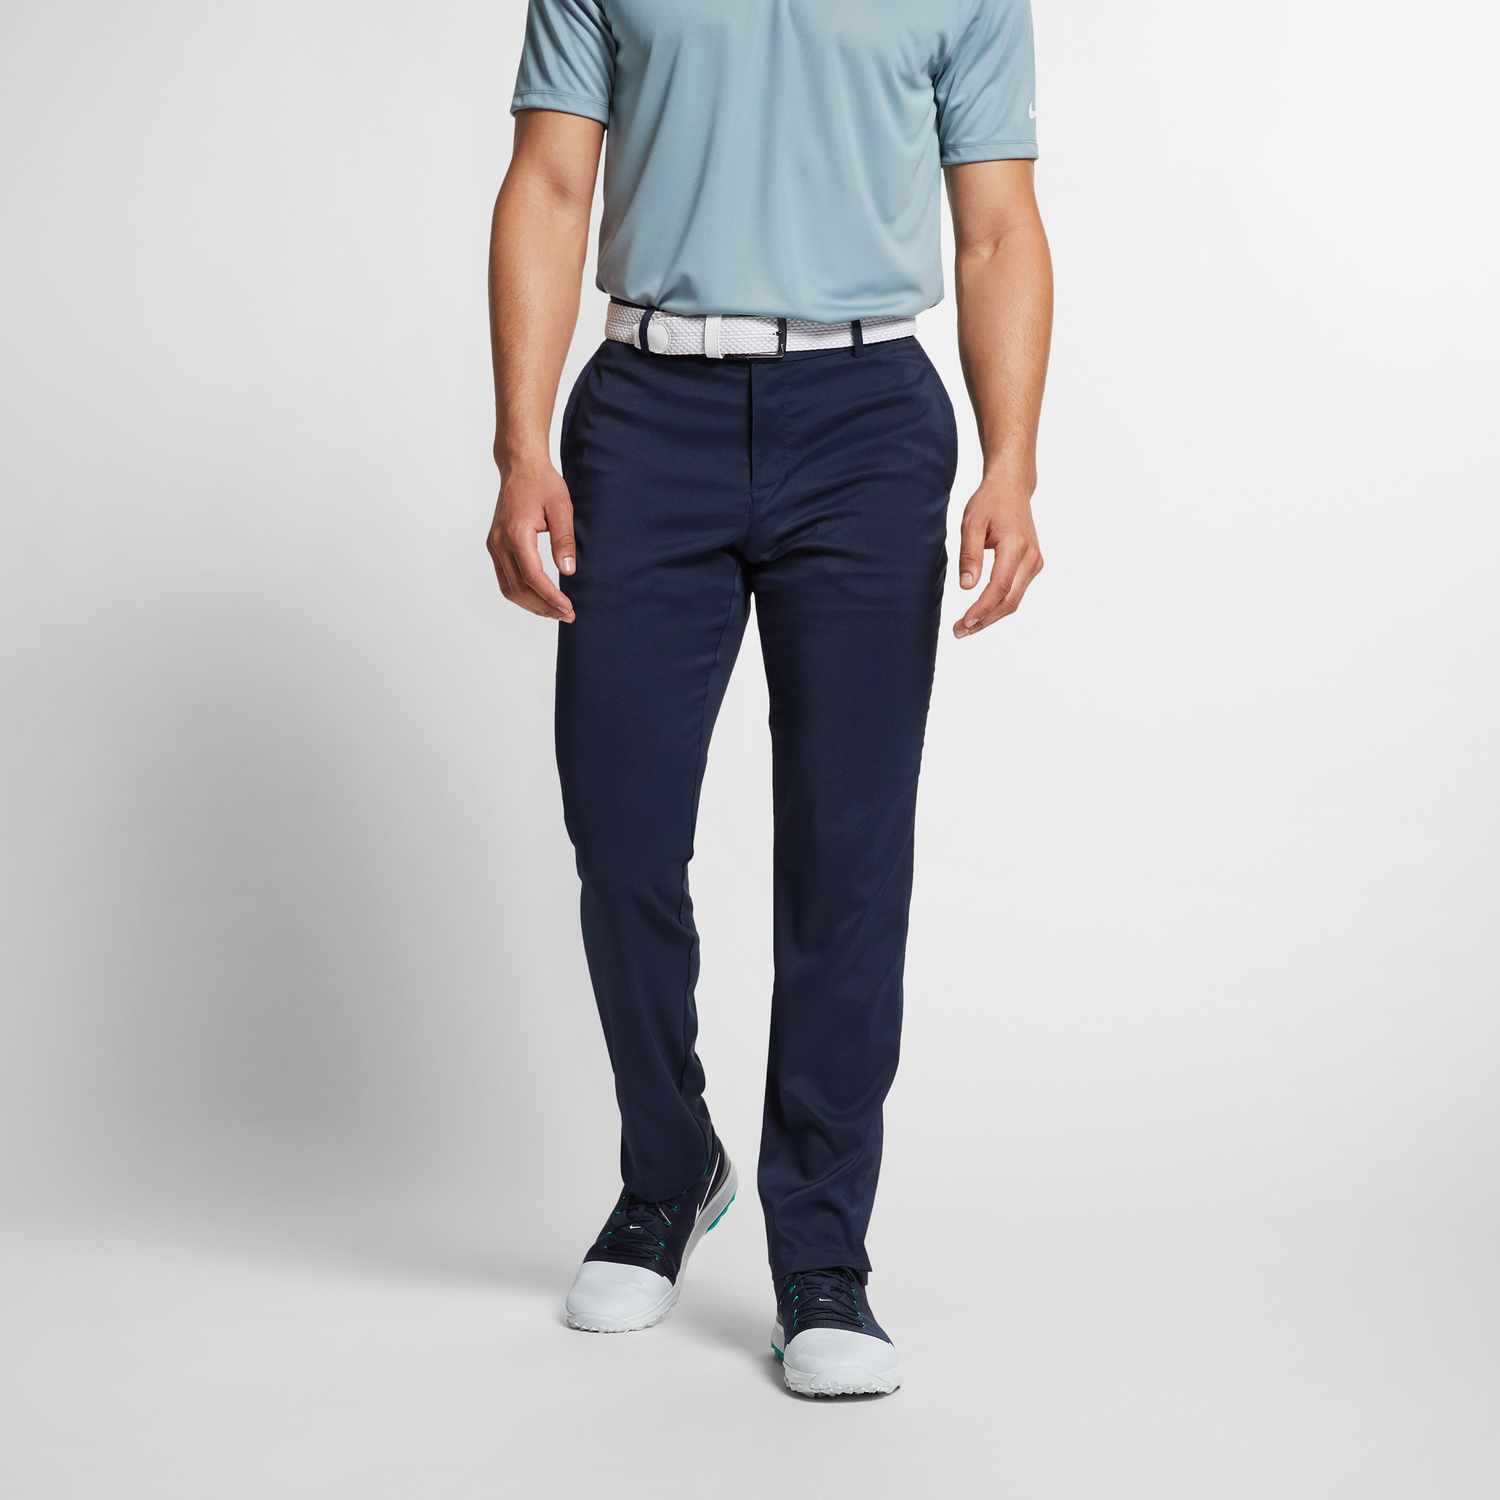 Nike Golf Trousers for Men for sale  eBay